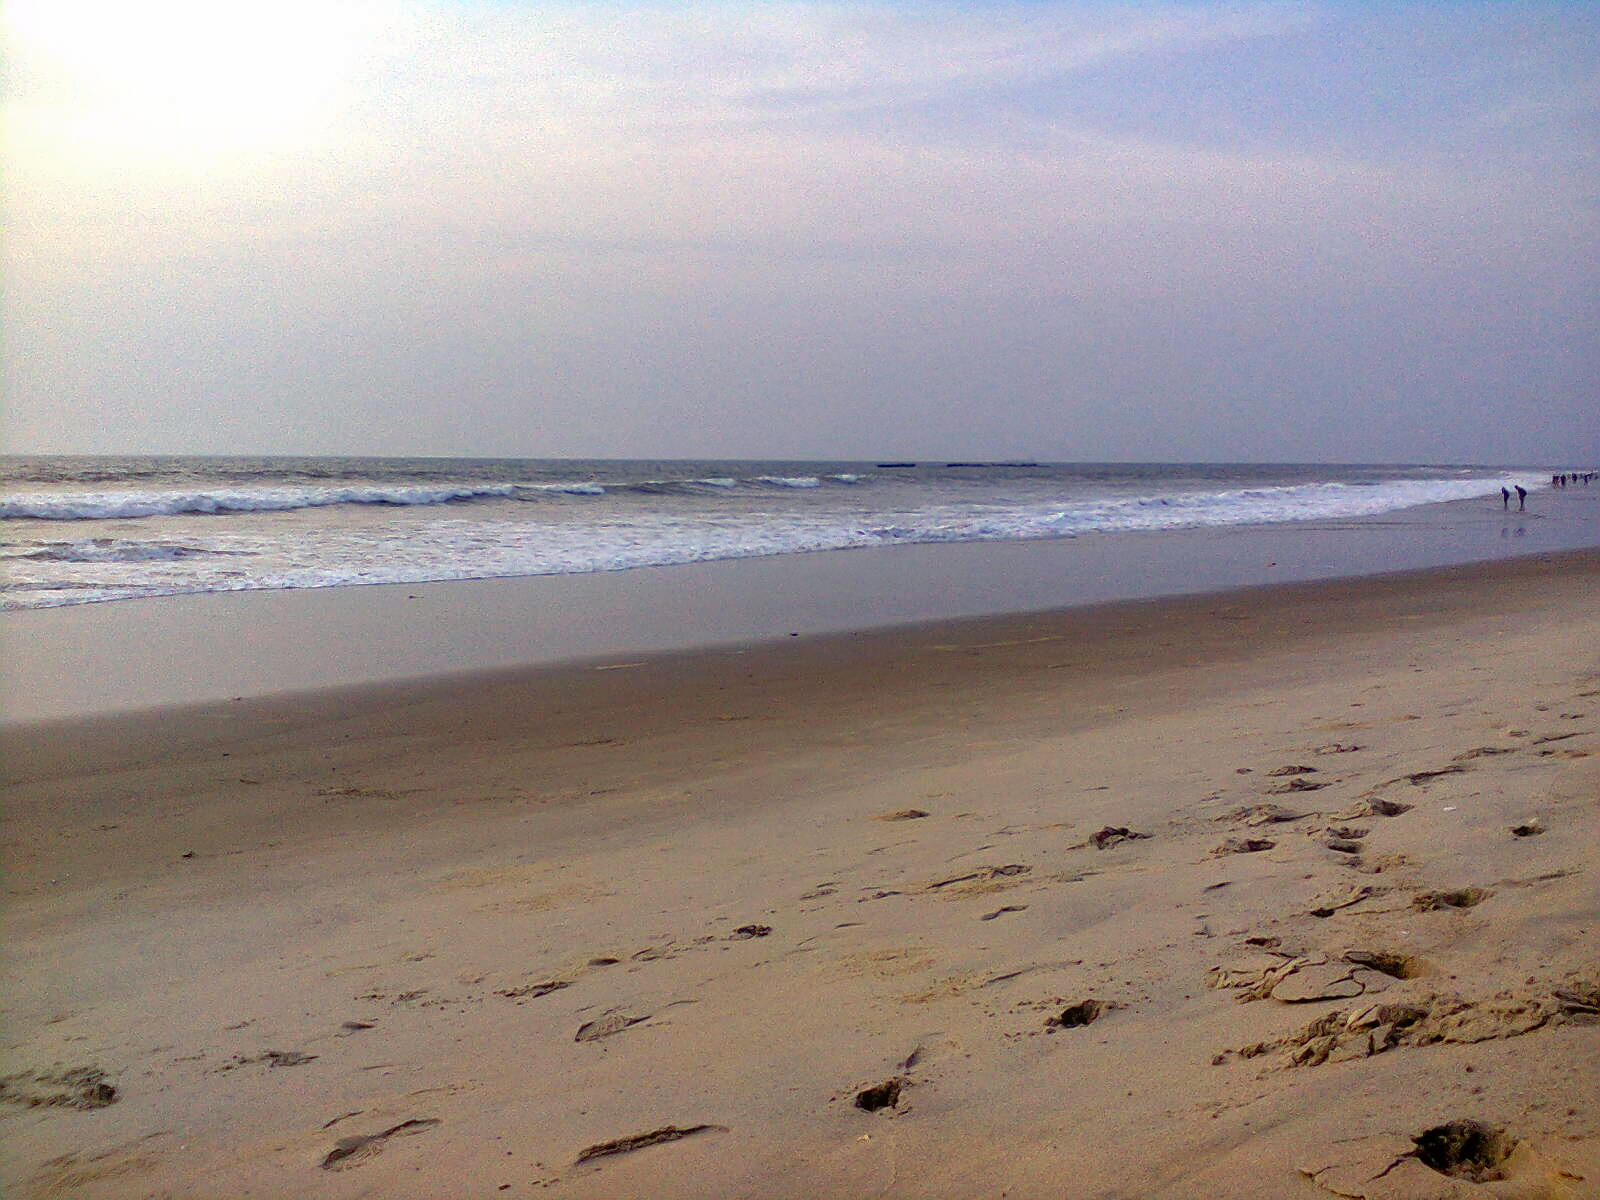 Tannirbhavi Beach Overview